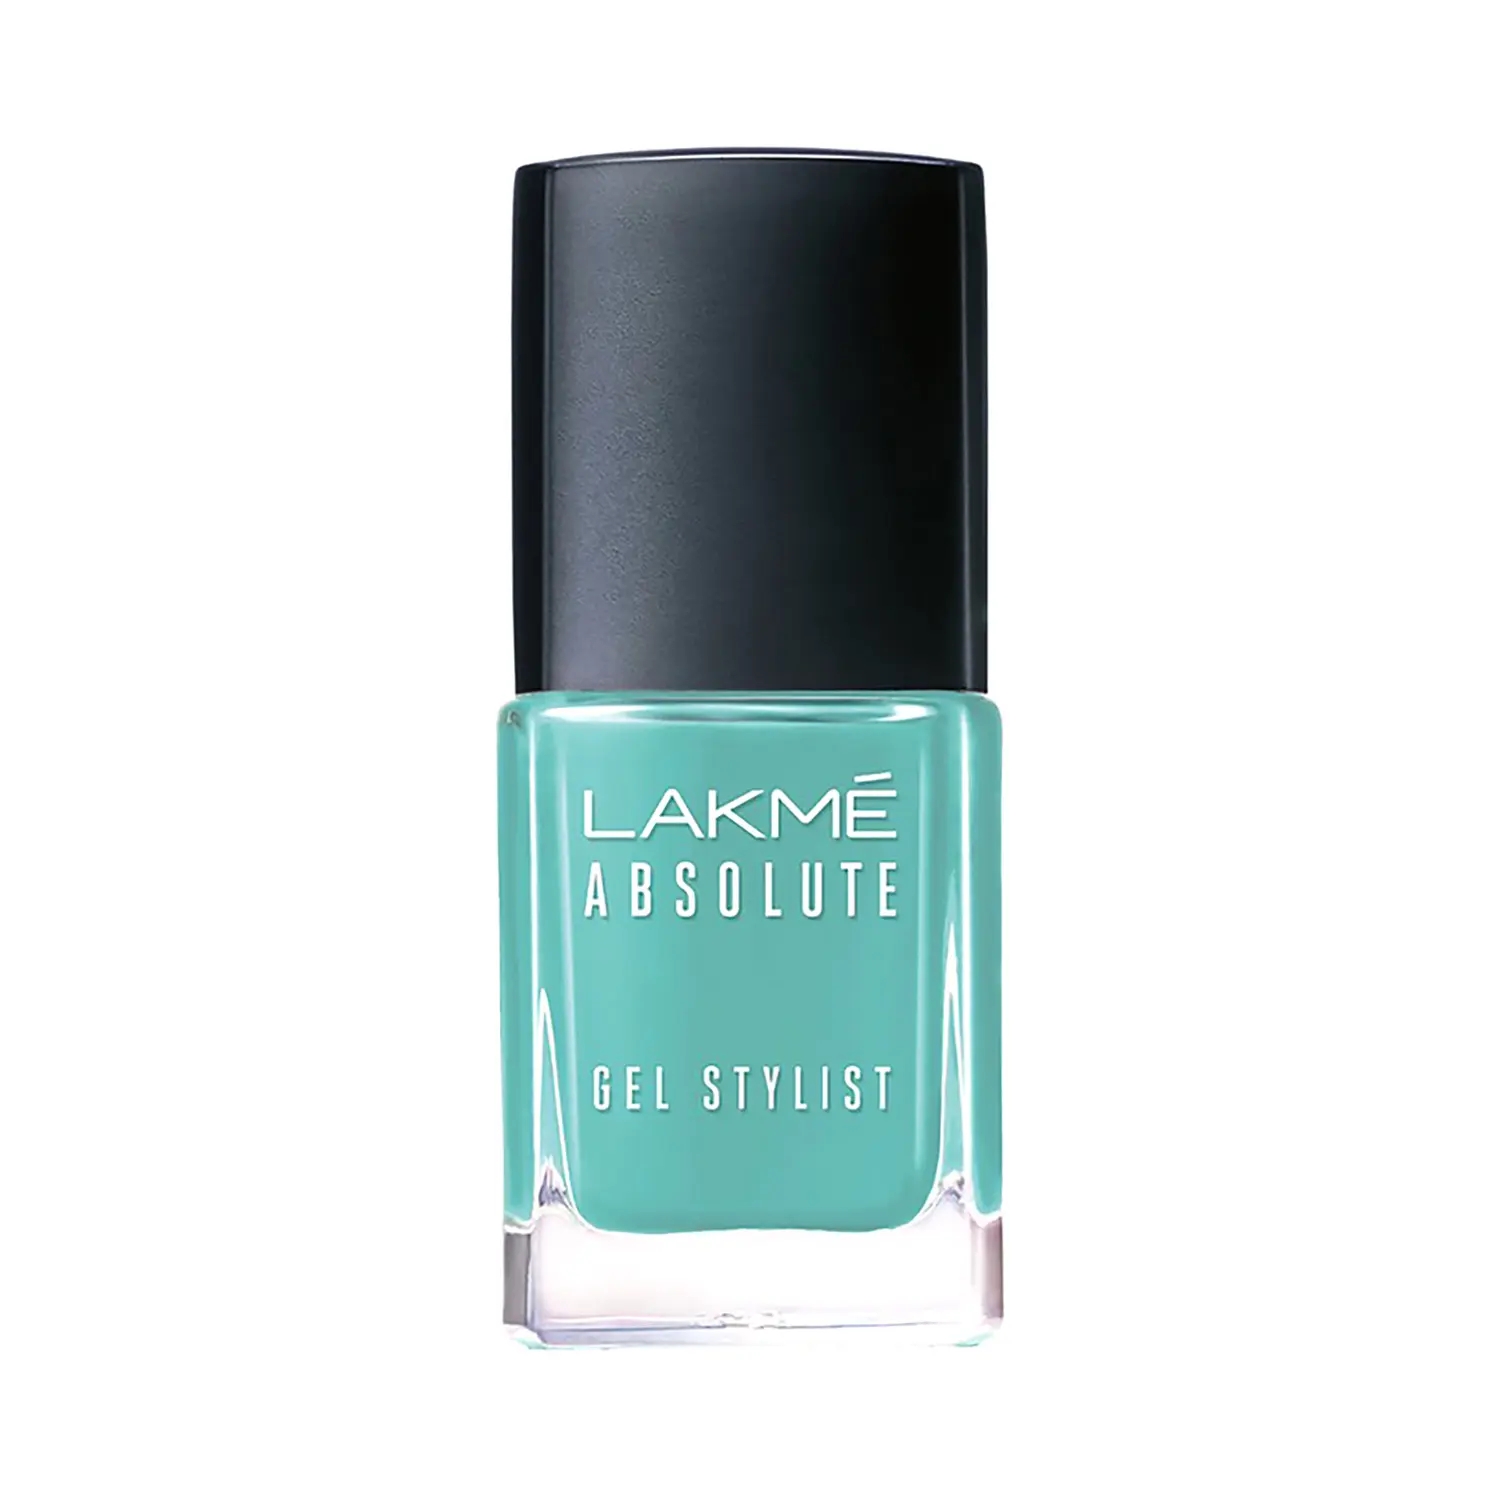 Lakme Absolute Gel Stylist Nail Color - Skyfall (12ml)